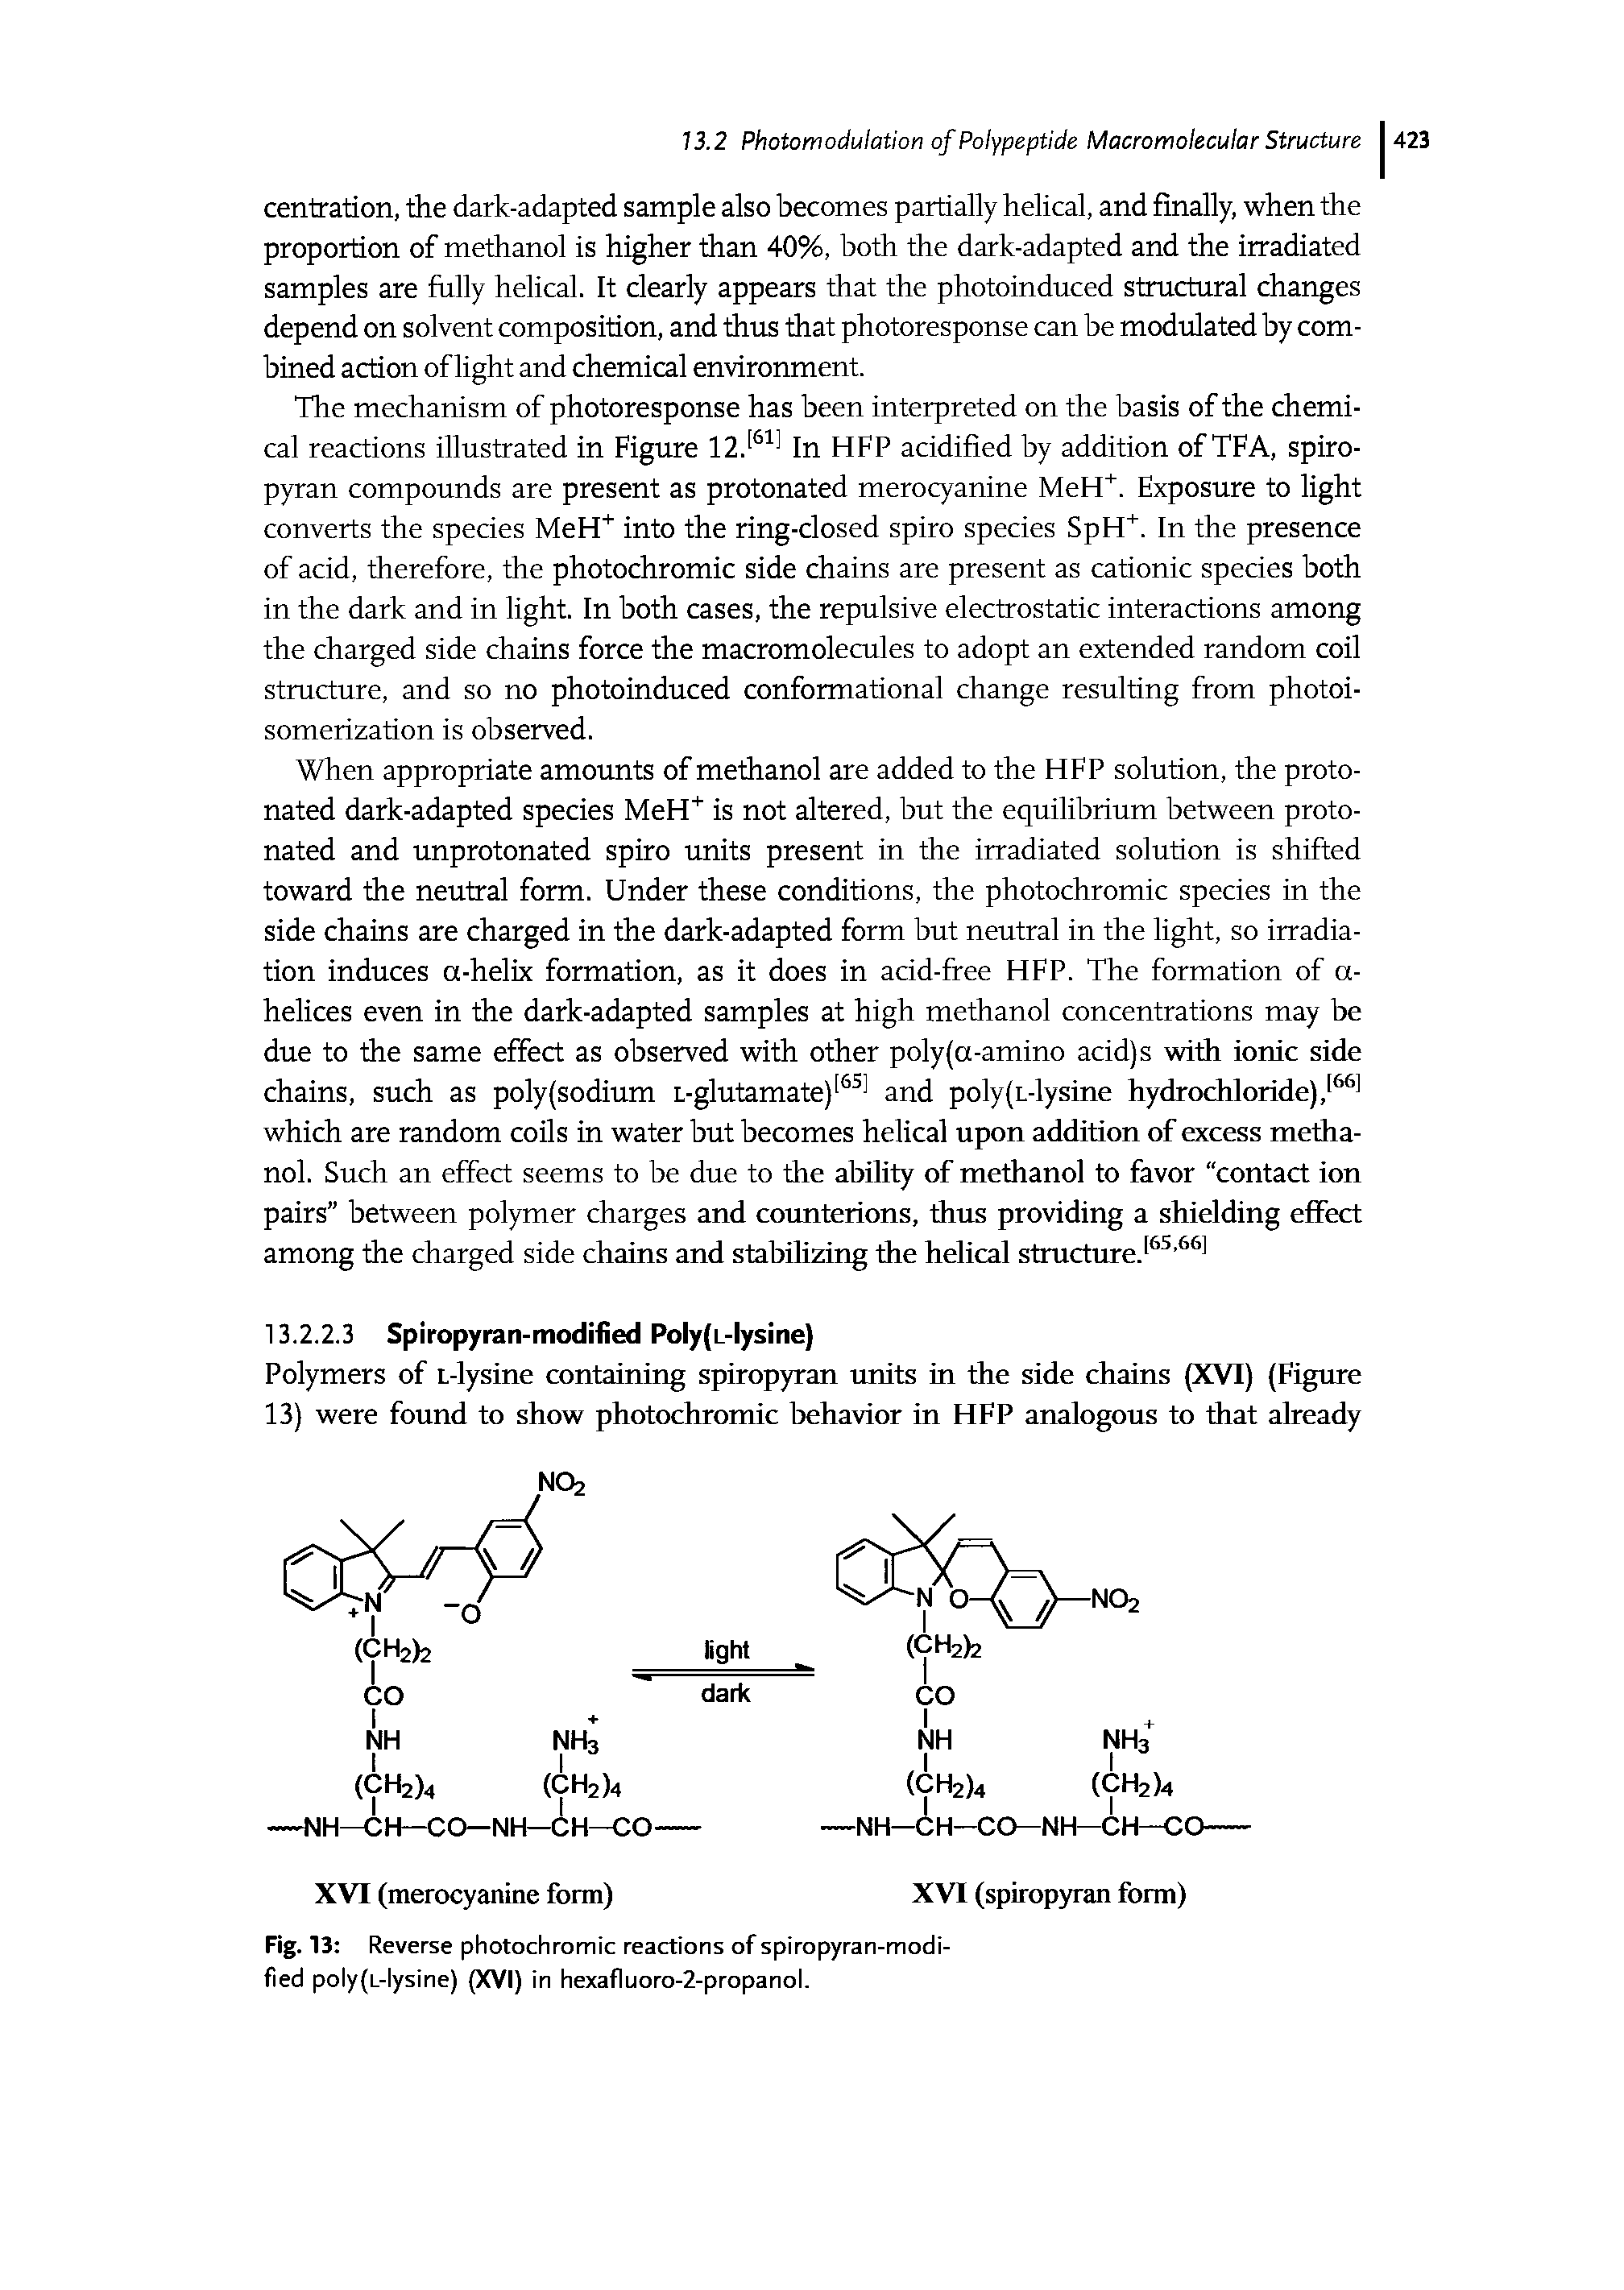 Fig. 13 Reverse photochromic reactions of spiropyran-modified poly(L-lysine) (XVI) in hexafluoro-2-propanol.